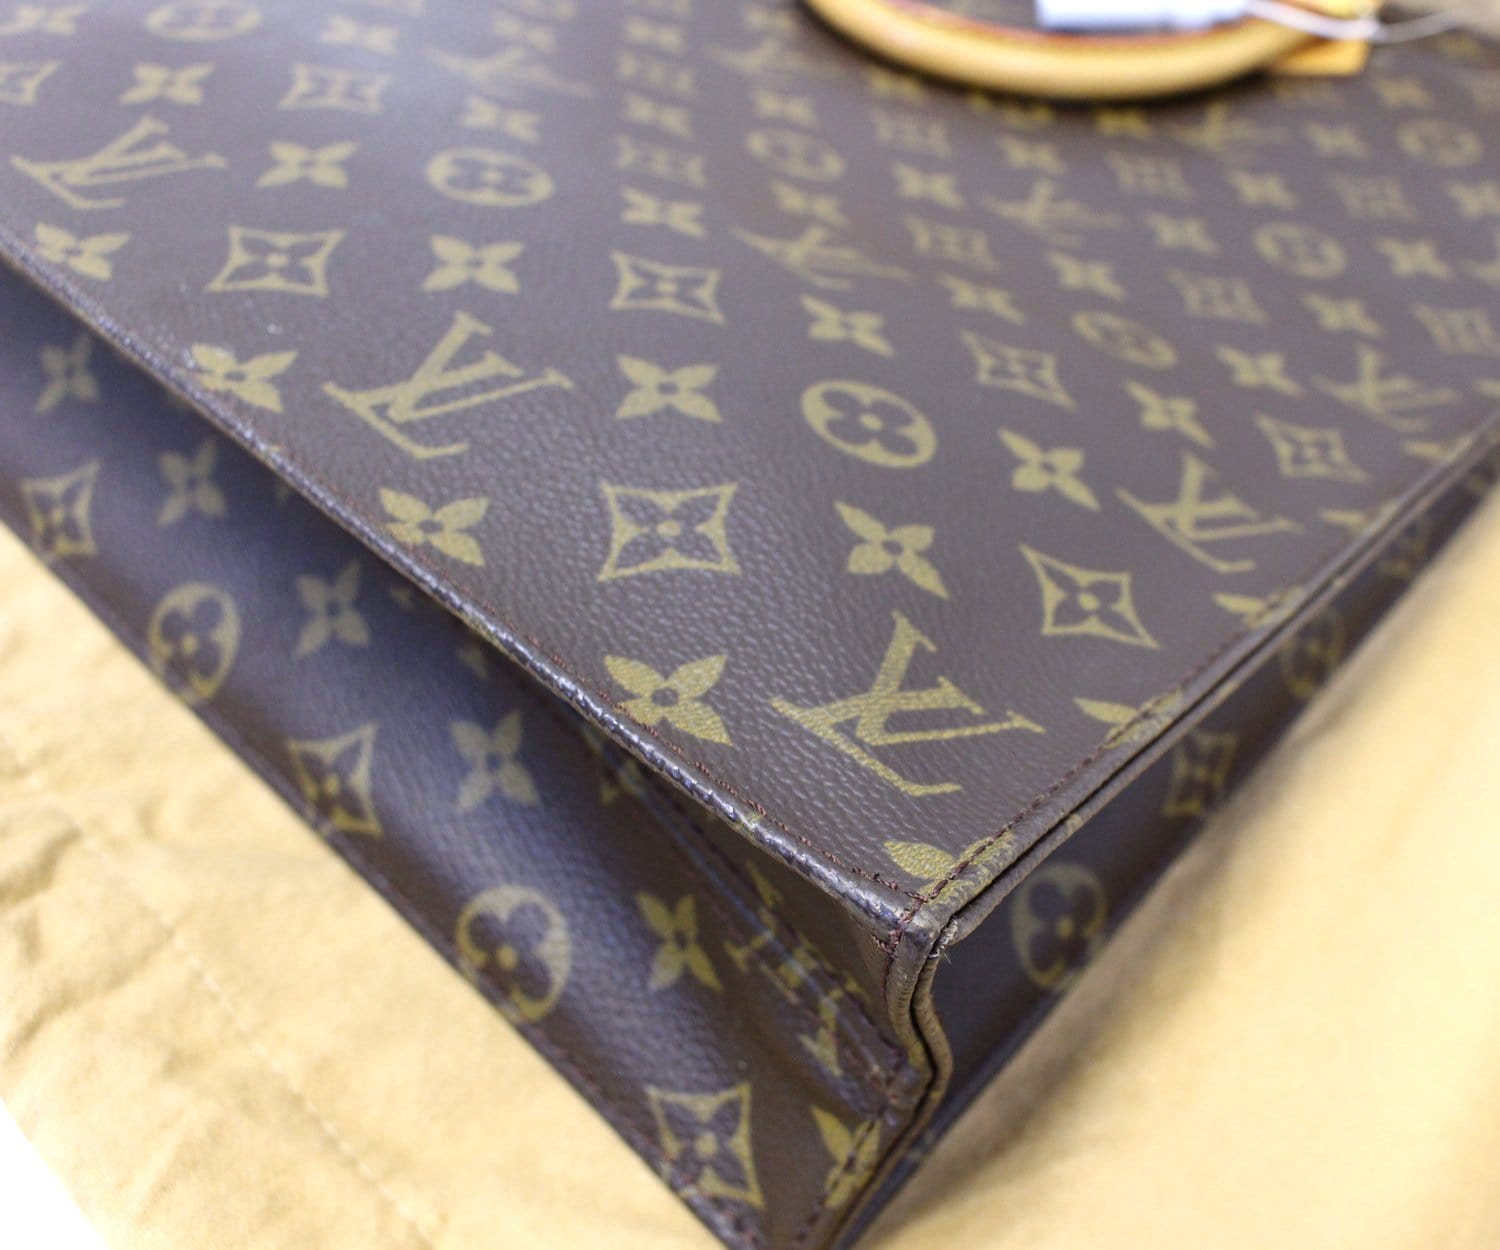 Buy 1 x Designer Handbag/Purse - Louis Vuitton Pattern on A4 Size